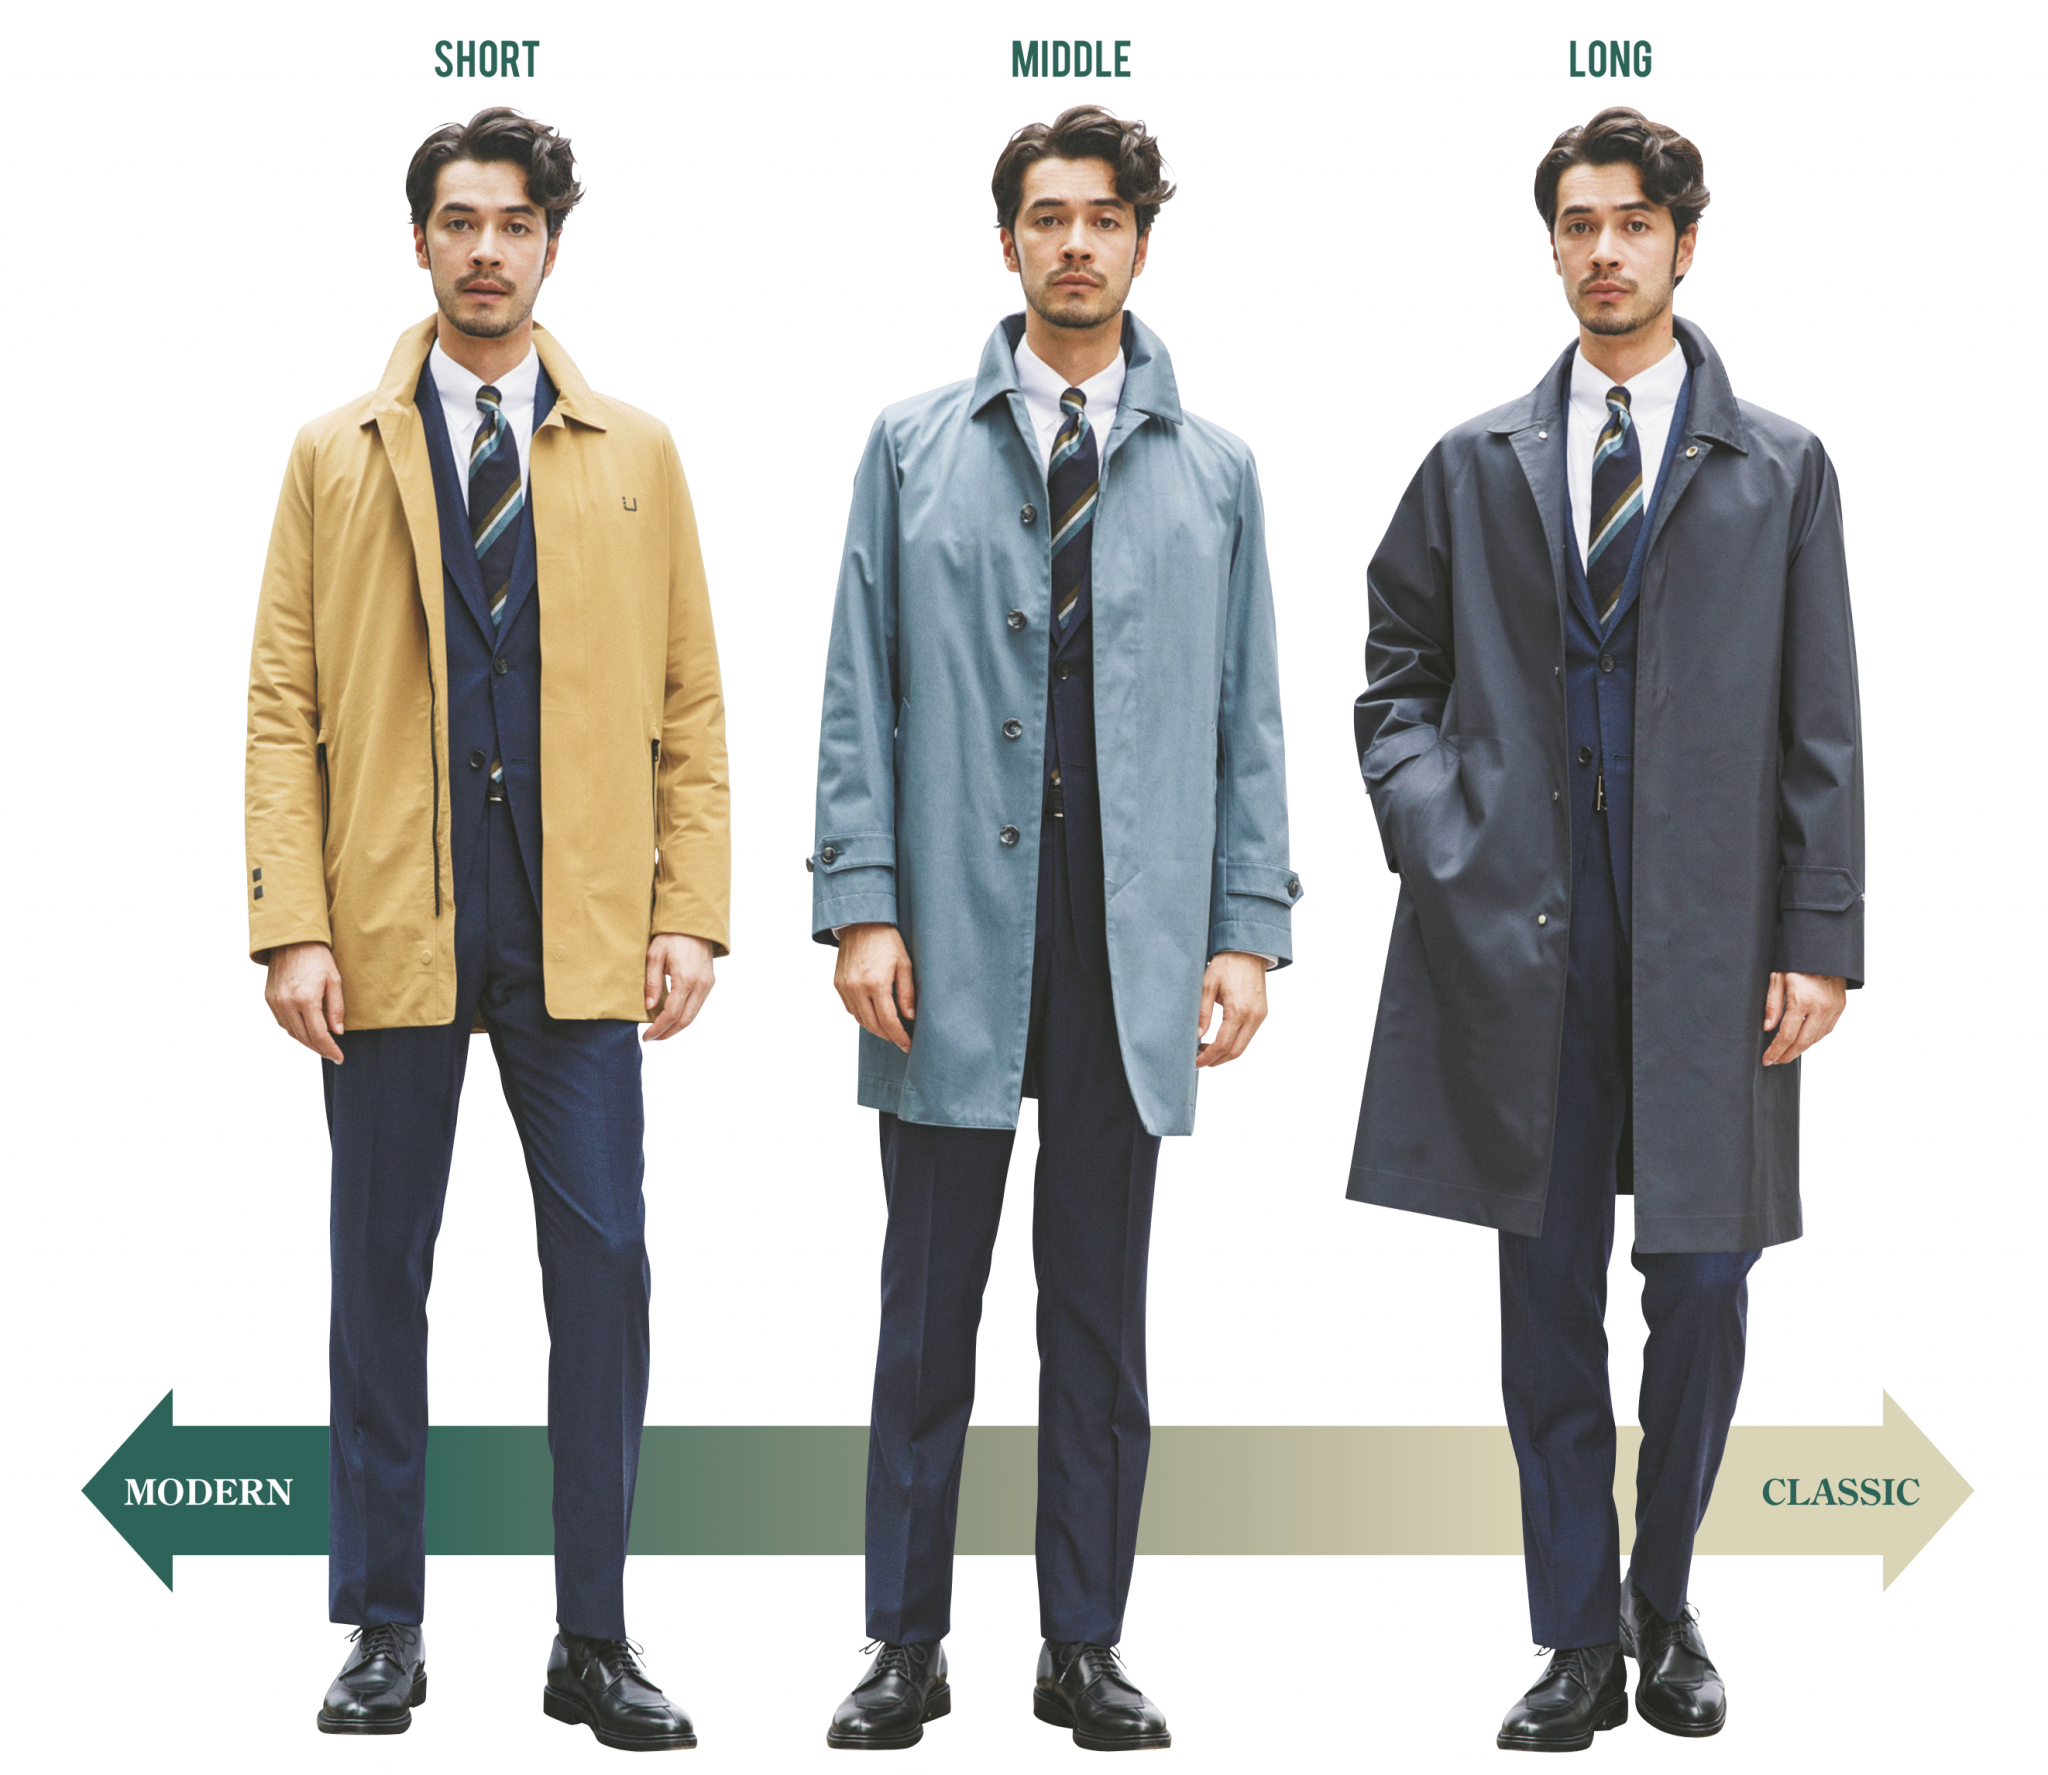 Bizアウター人気no 1はステンカラーのコートに決まり Men Sjoker Premium メンズファッション雑誌